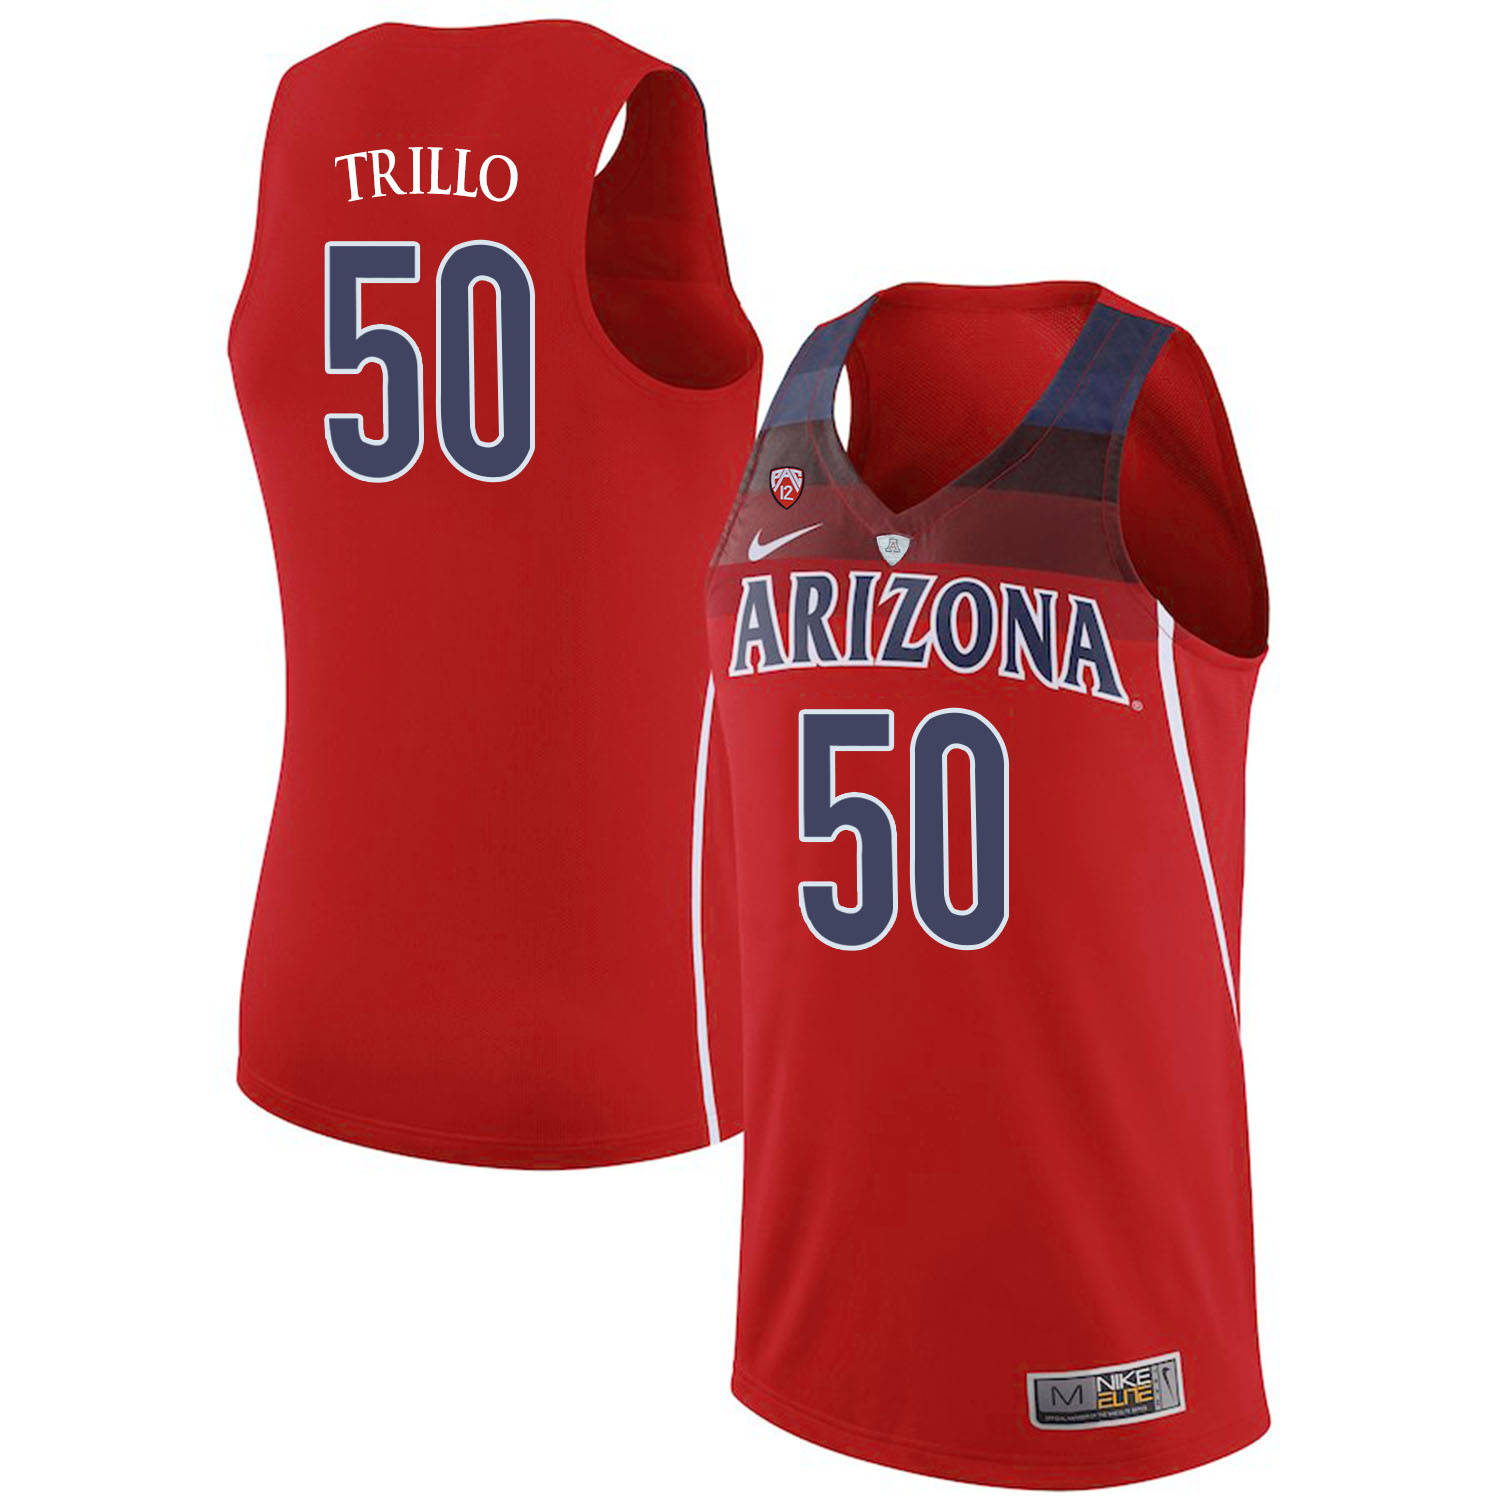 Arizona Wildcats 50 Tyler Trillo Red College Basketball Jersey